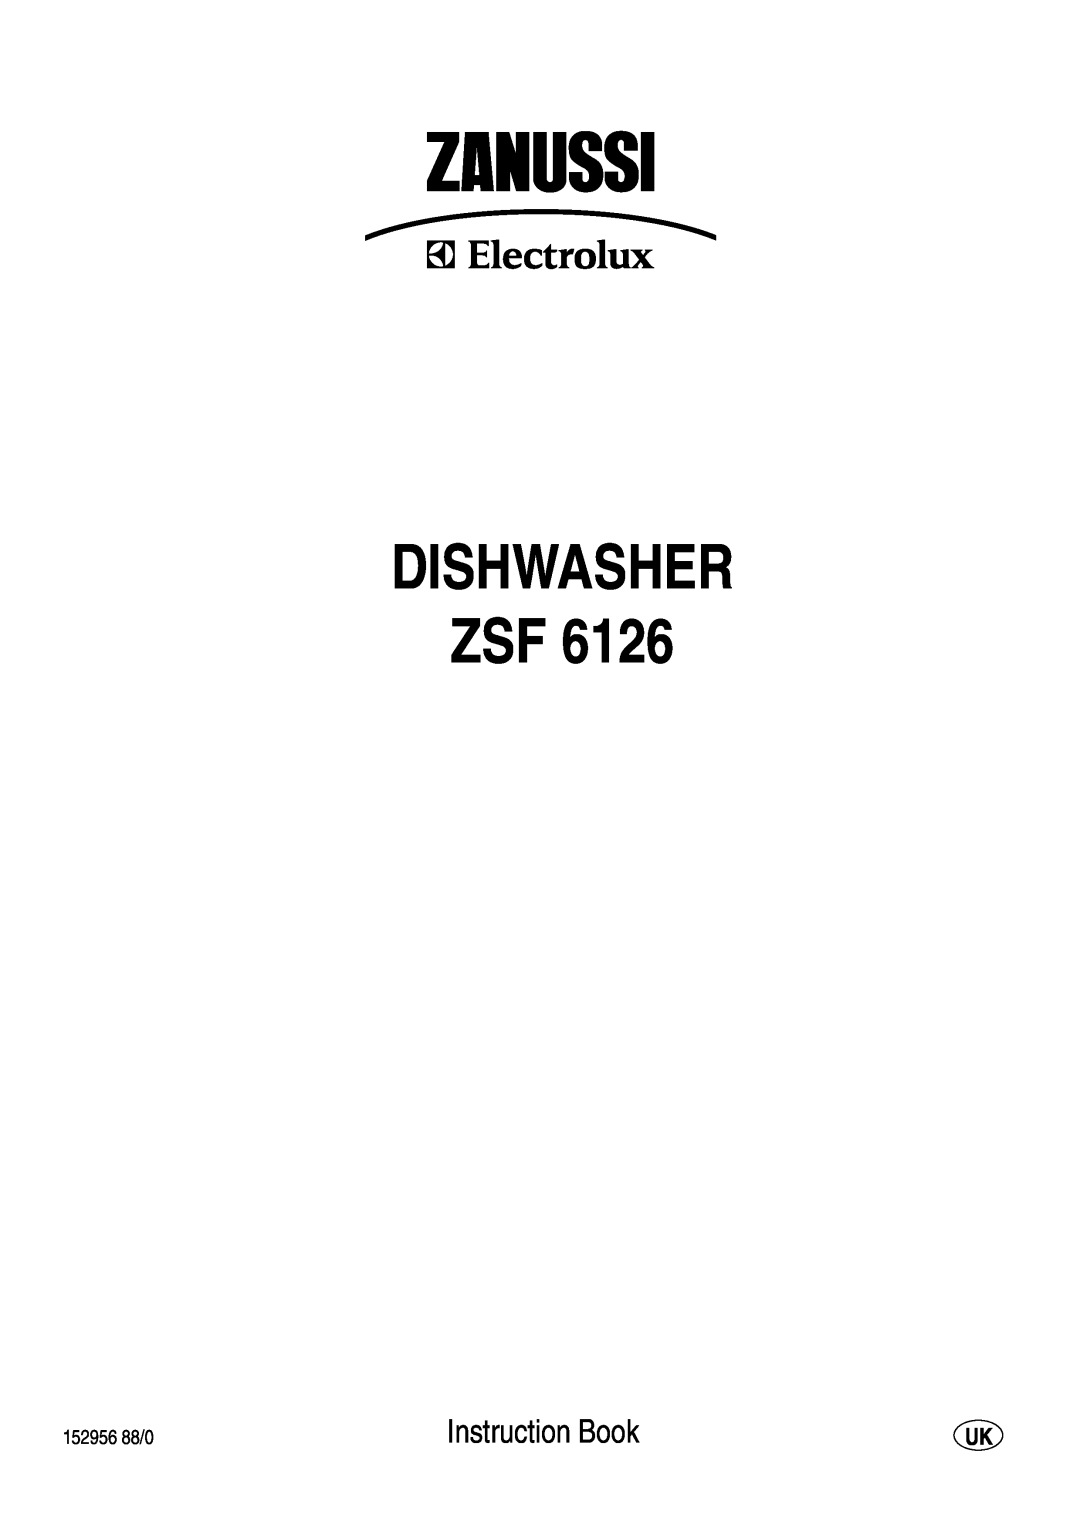 Zanussi ZSF 6126 manual Dishwasher Zsf, Instruction Book, 152956 88/0 